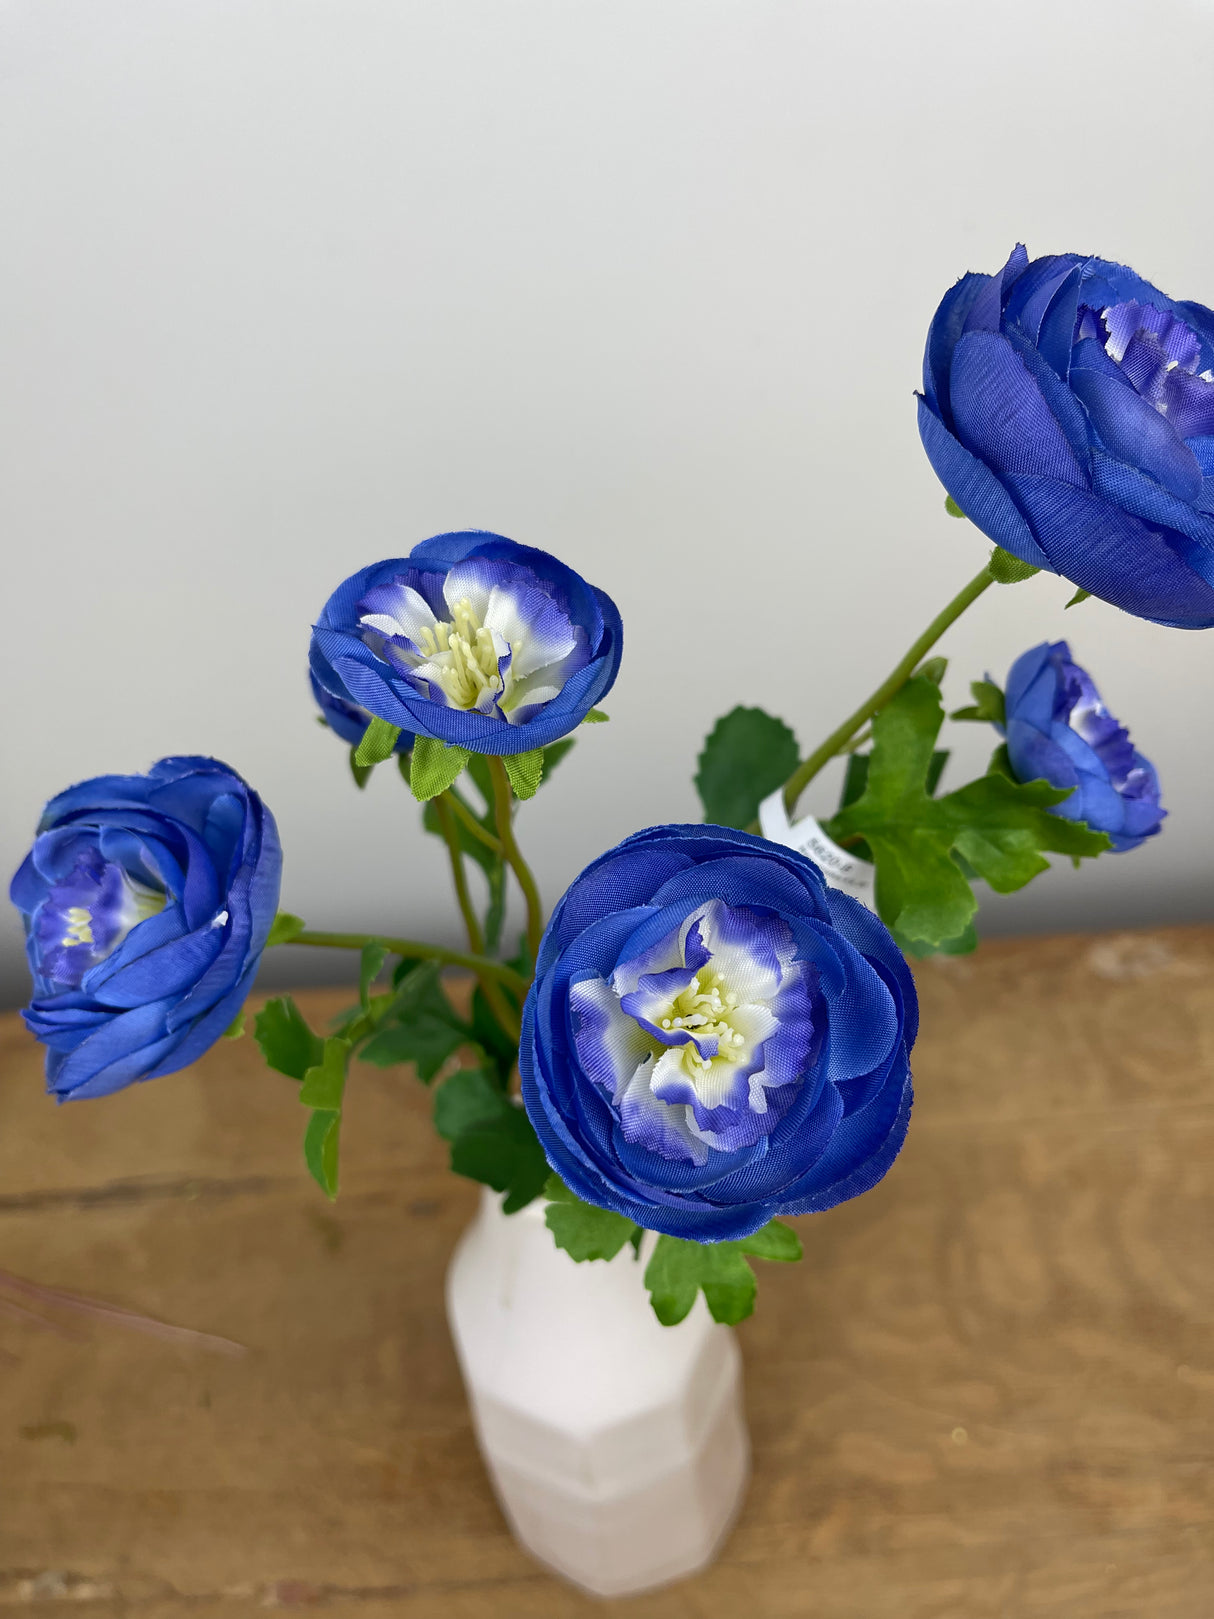 Blue Ranunculus